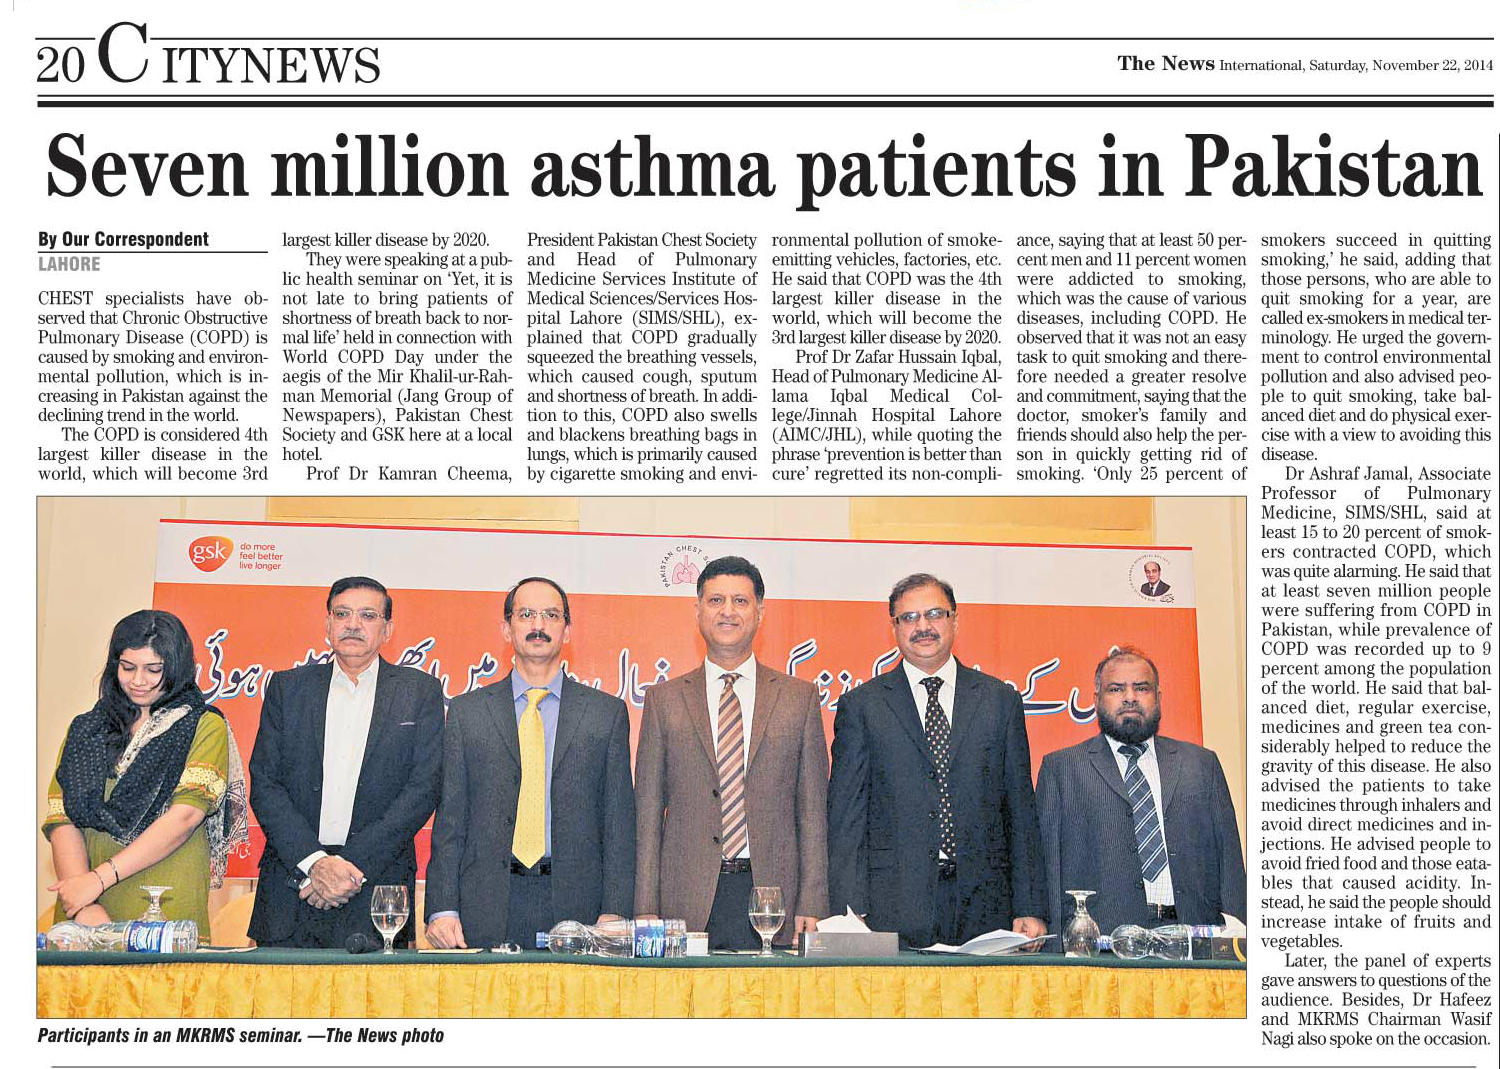 Seven million asthama patients in Pakistan